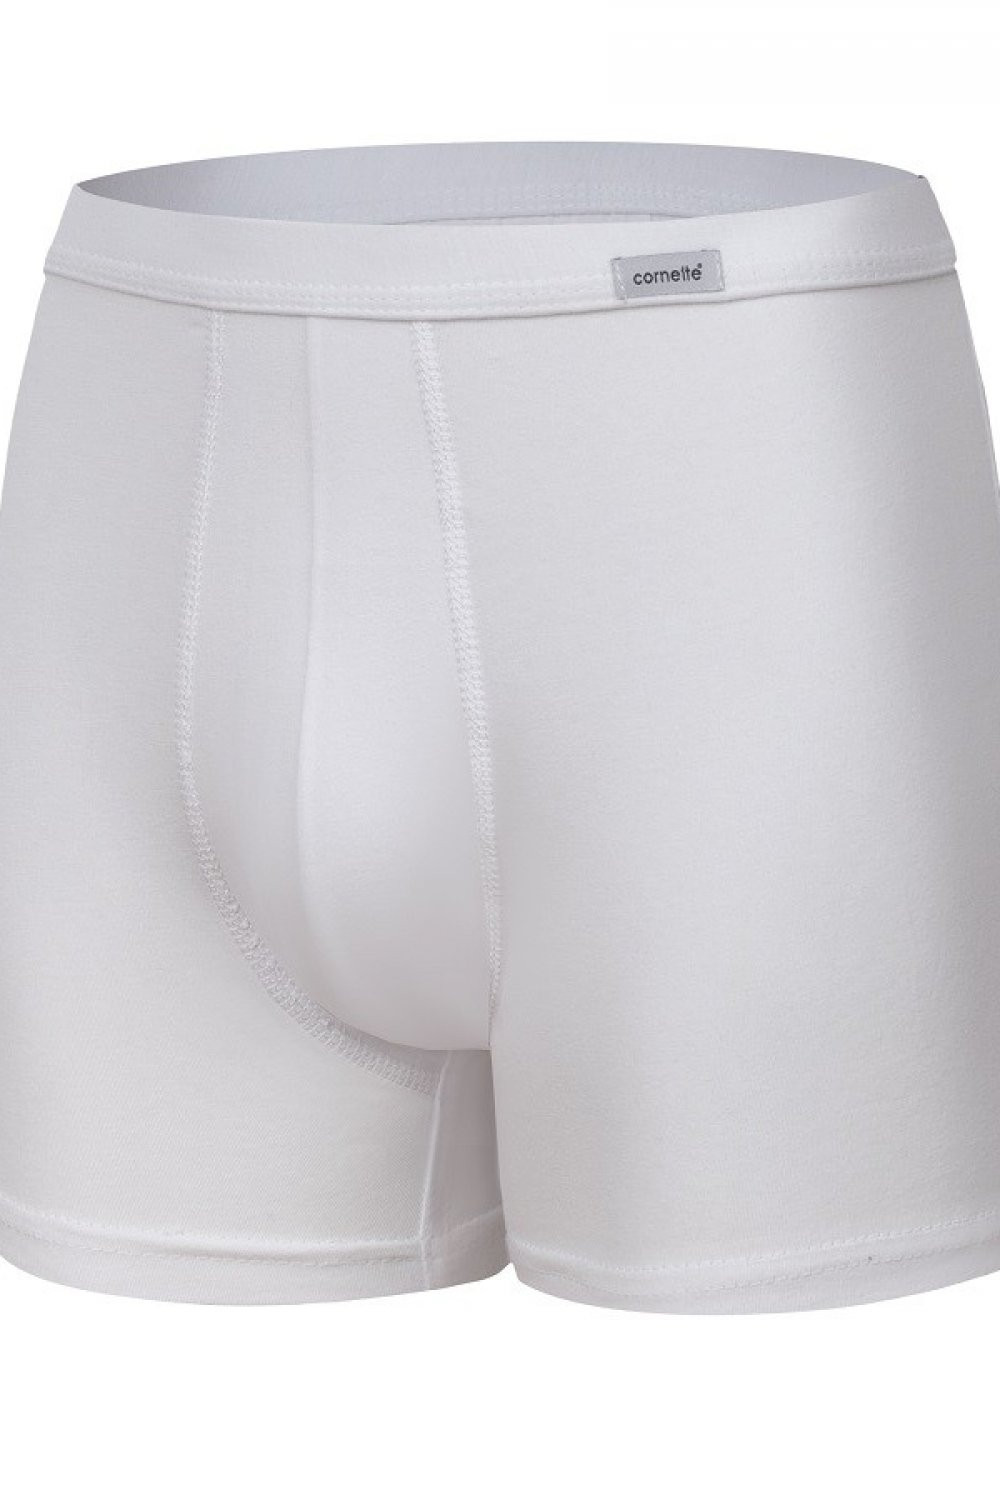 Pánské boxerky 220 white - CORNETTE bílá XL